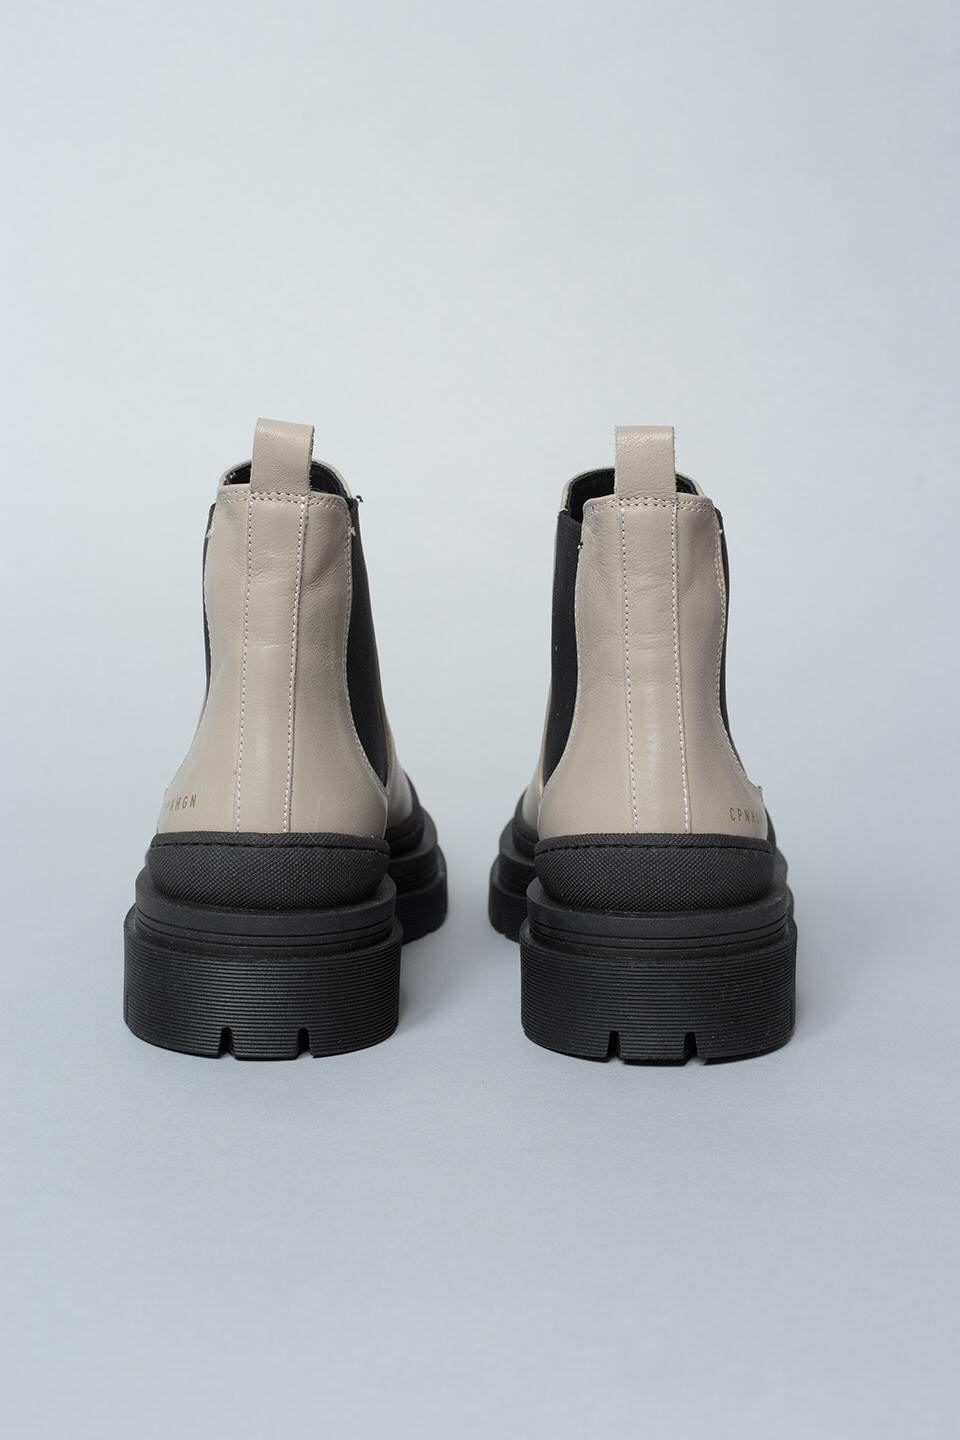 XP | Copenhagen Studios boots chelsea CPH735 cuir gris